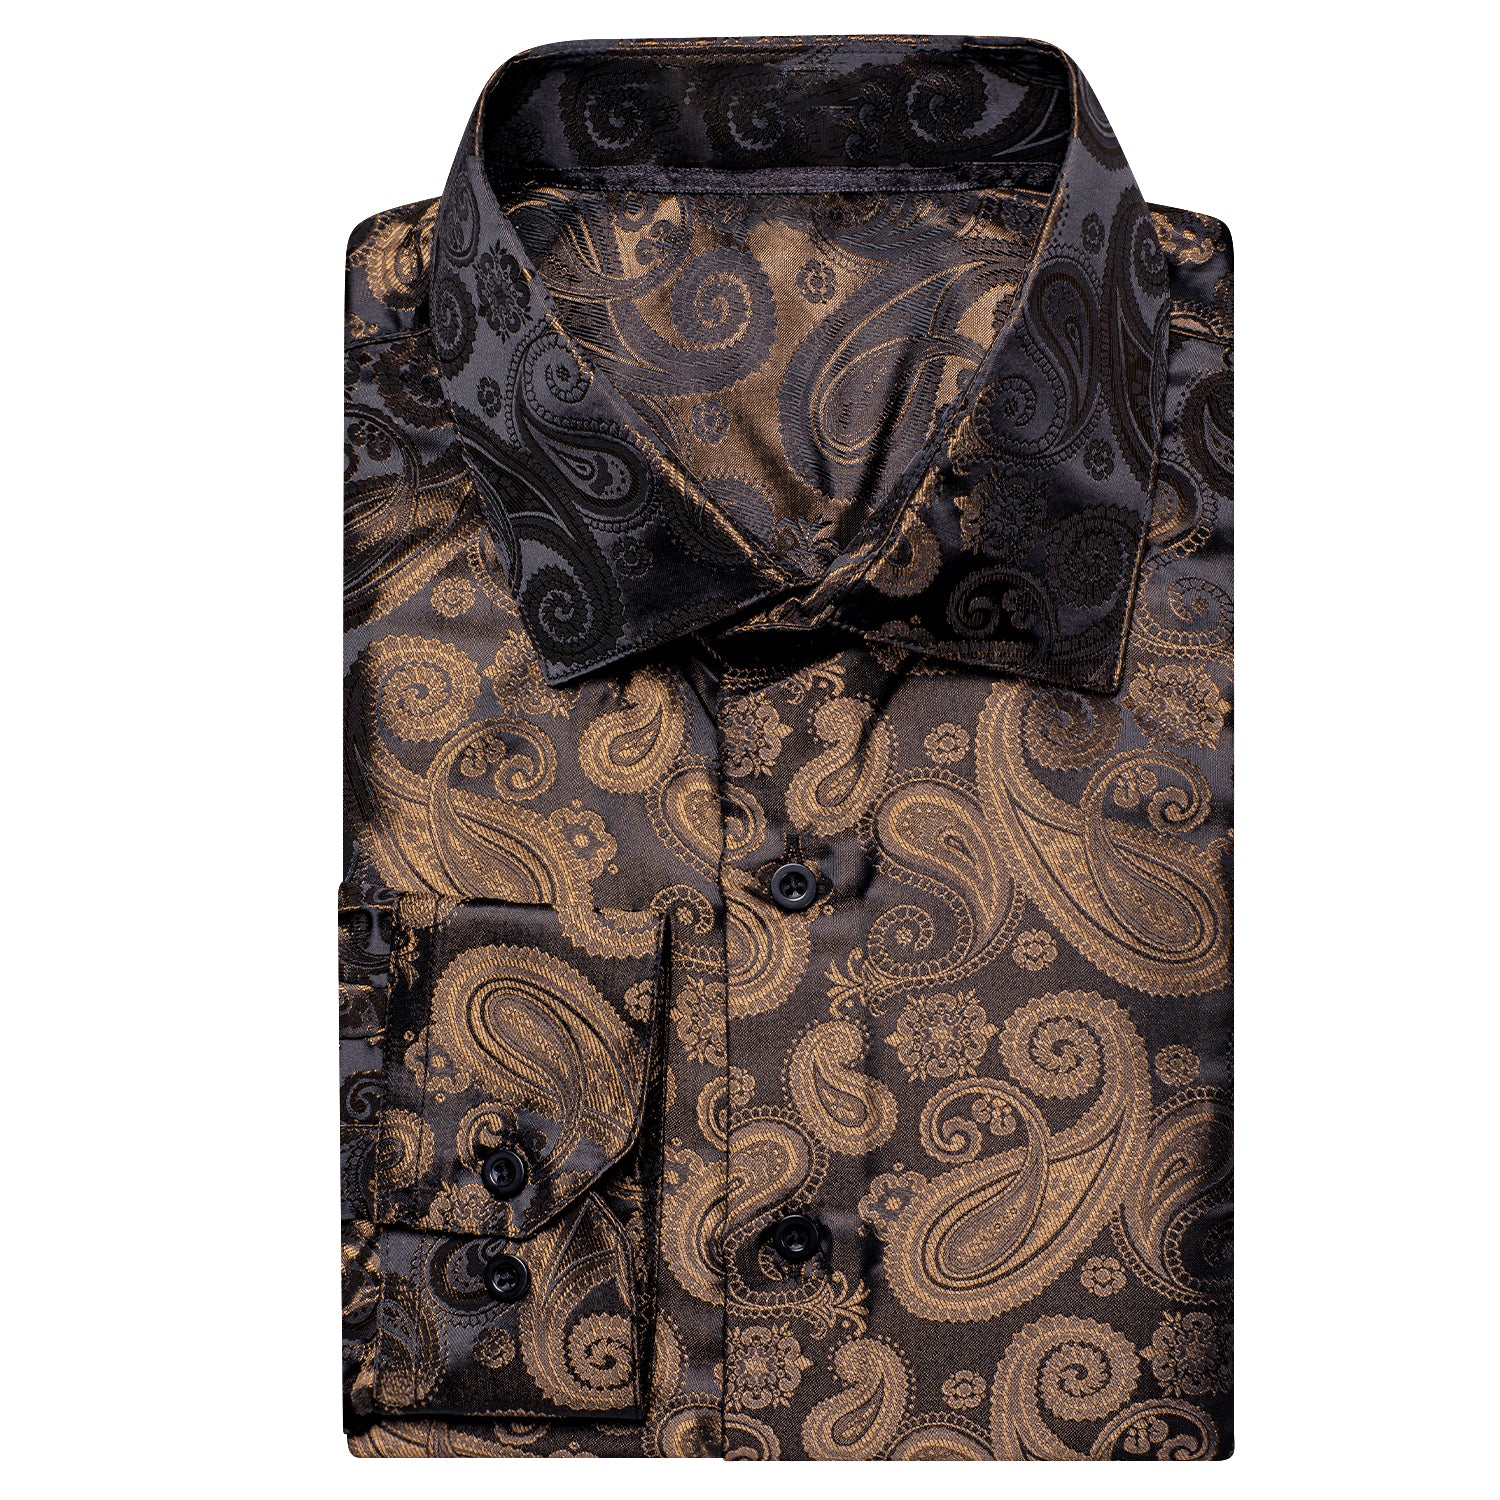 New Brown Black Paisley Silk Men's Long Sleeve Shirt Casual